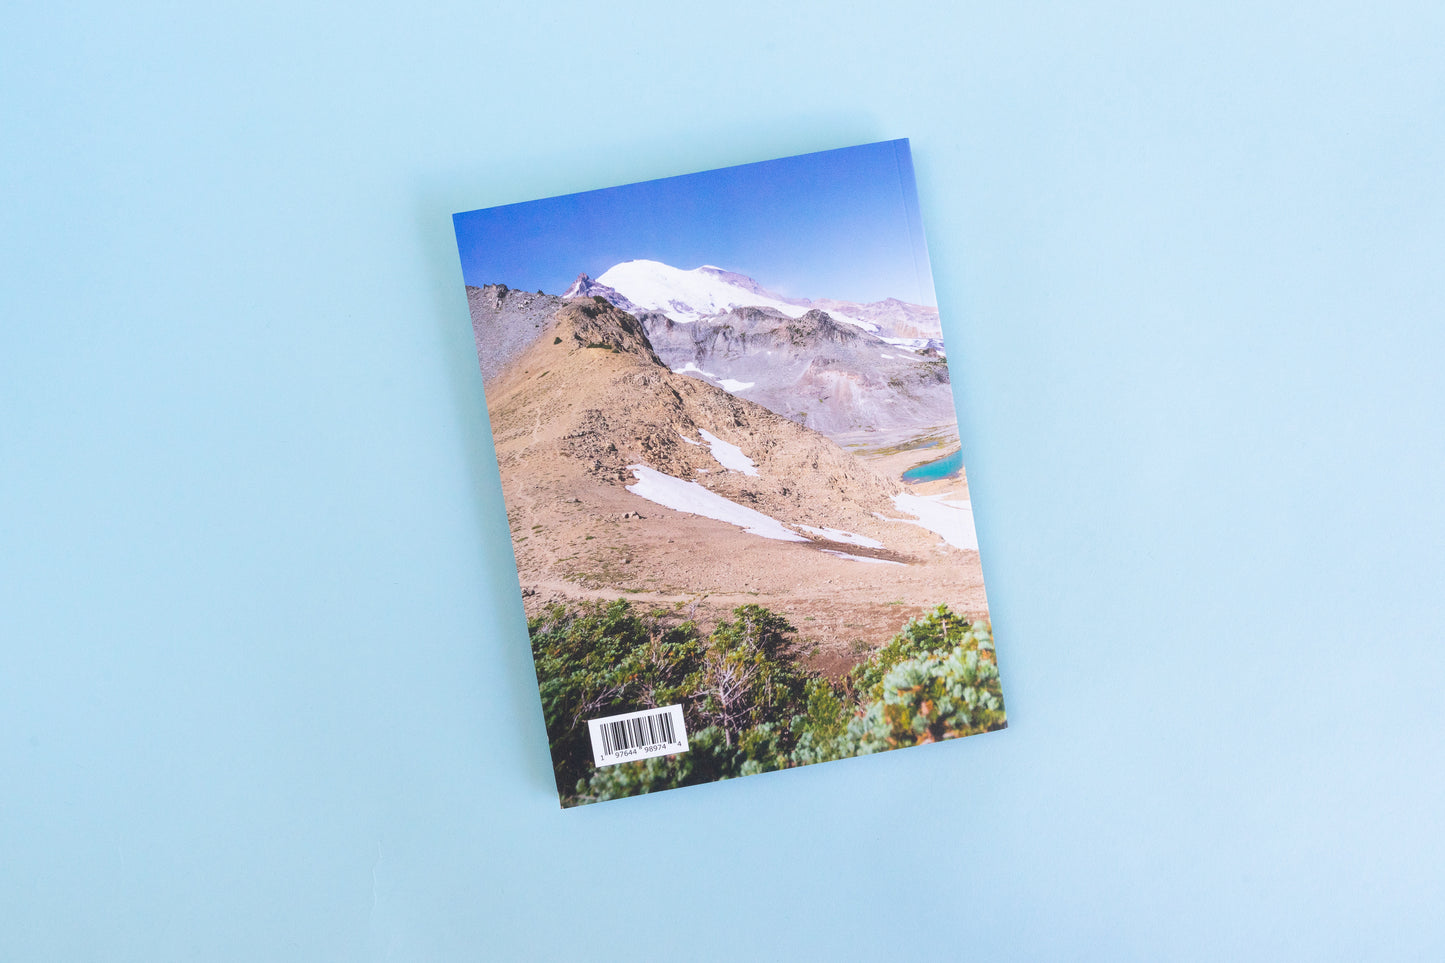 Trails Magazine Issue 2